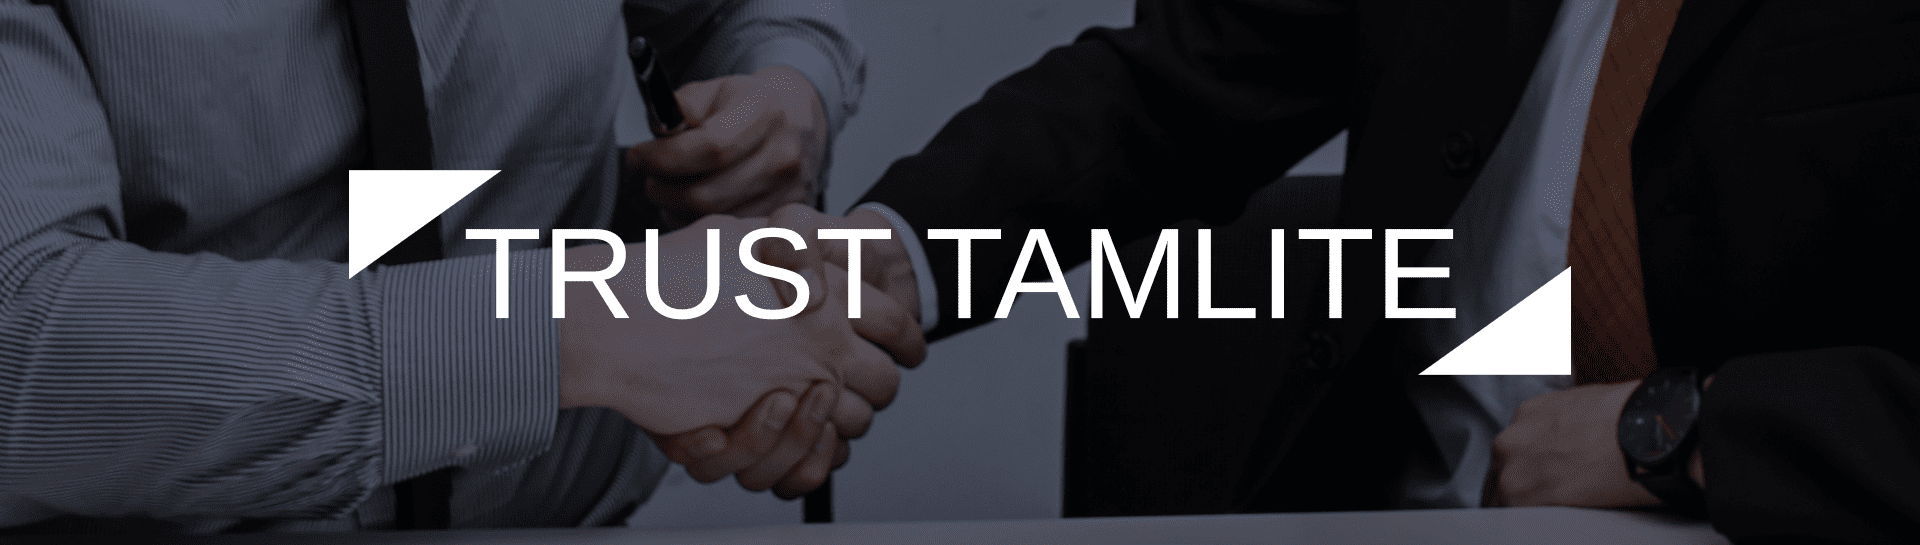 Trust Tamlite banner